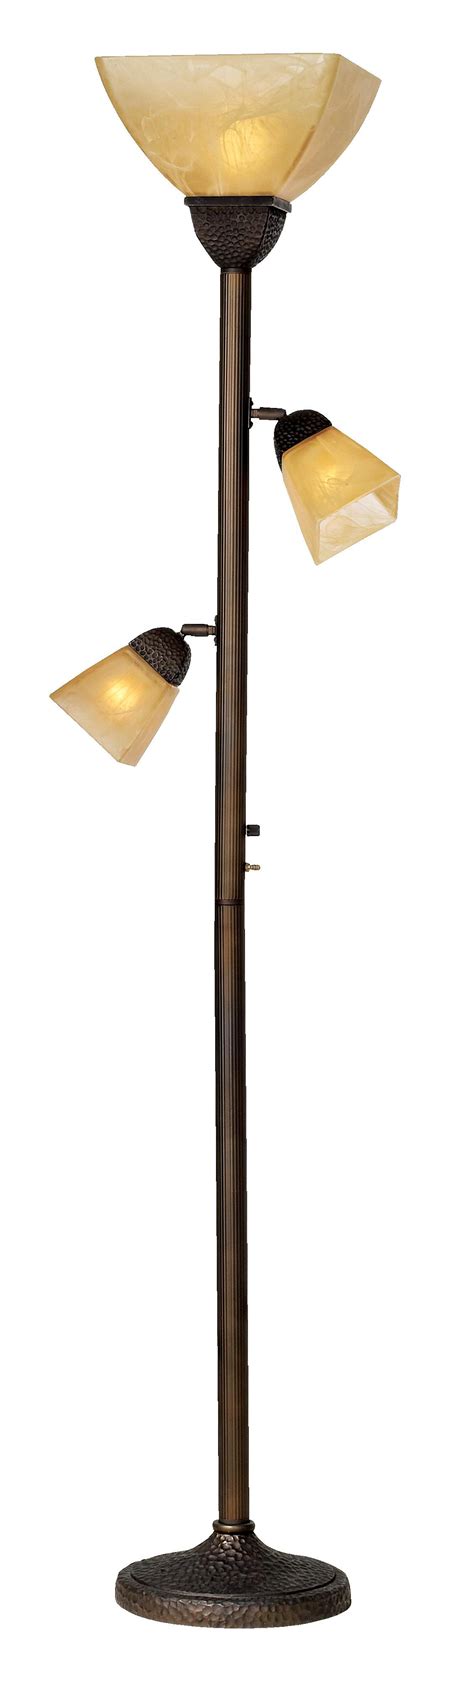 Imagine a pendant lamp… upside down, raising delicately from the floor. Champagne Glass Torchiere Floor Lamp | LampsPlus.com ...